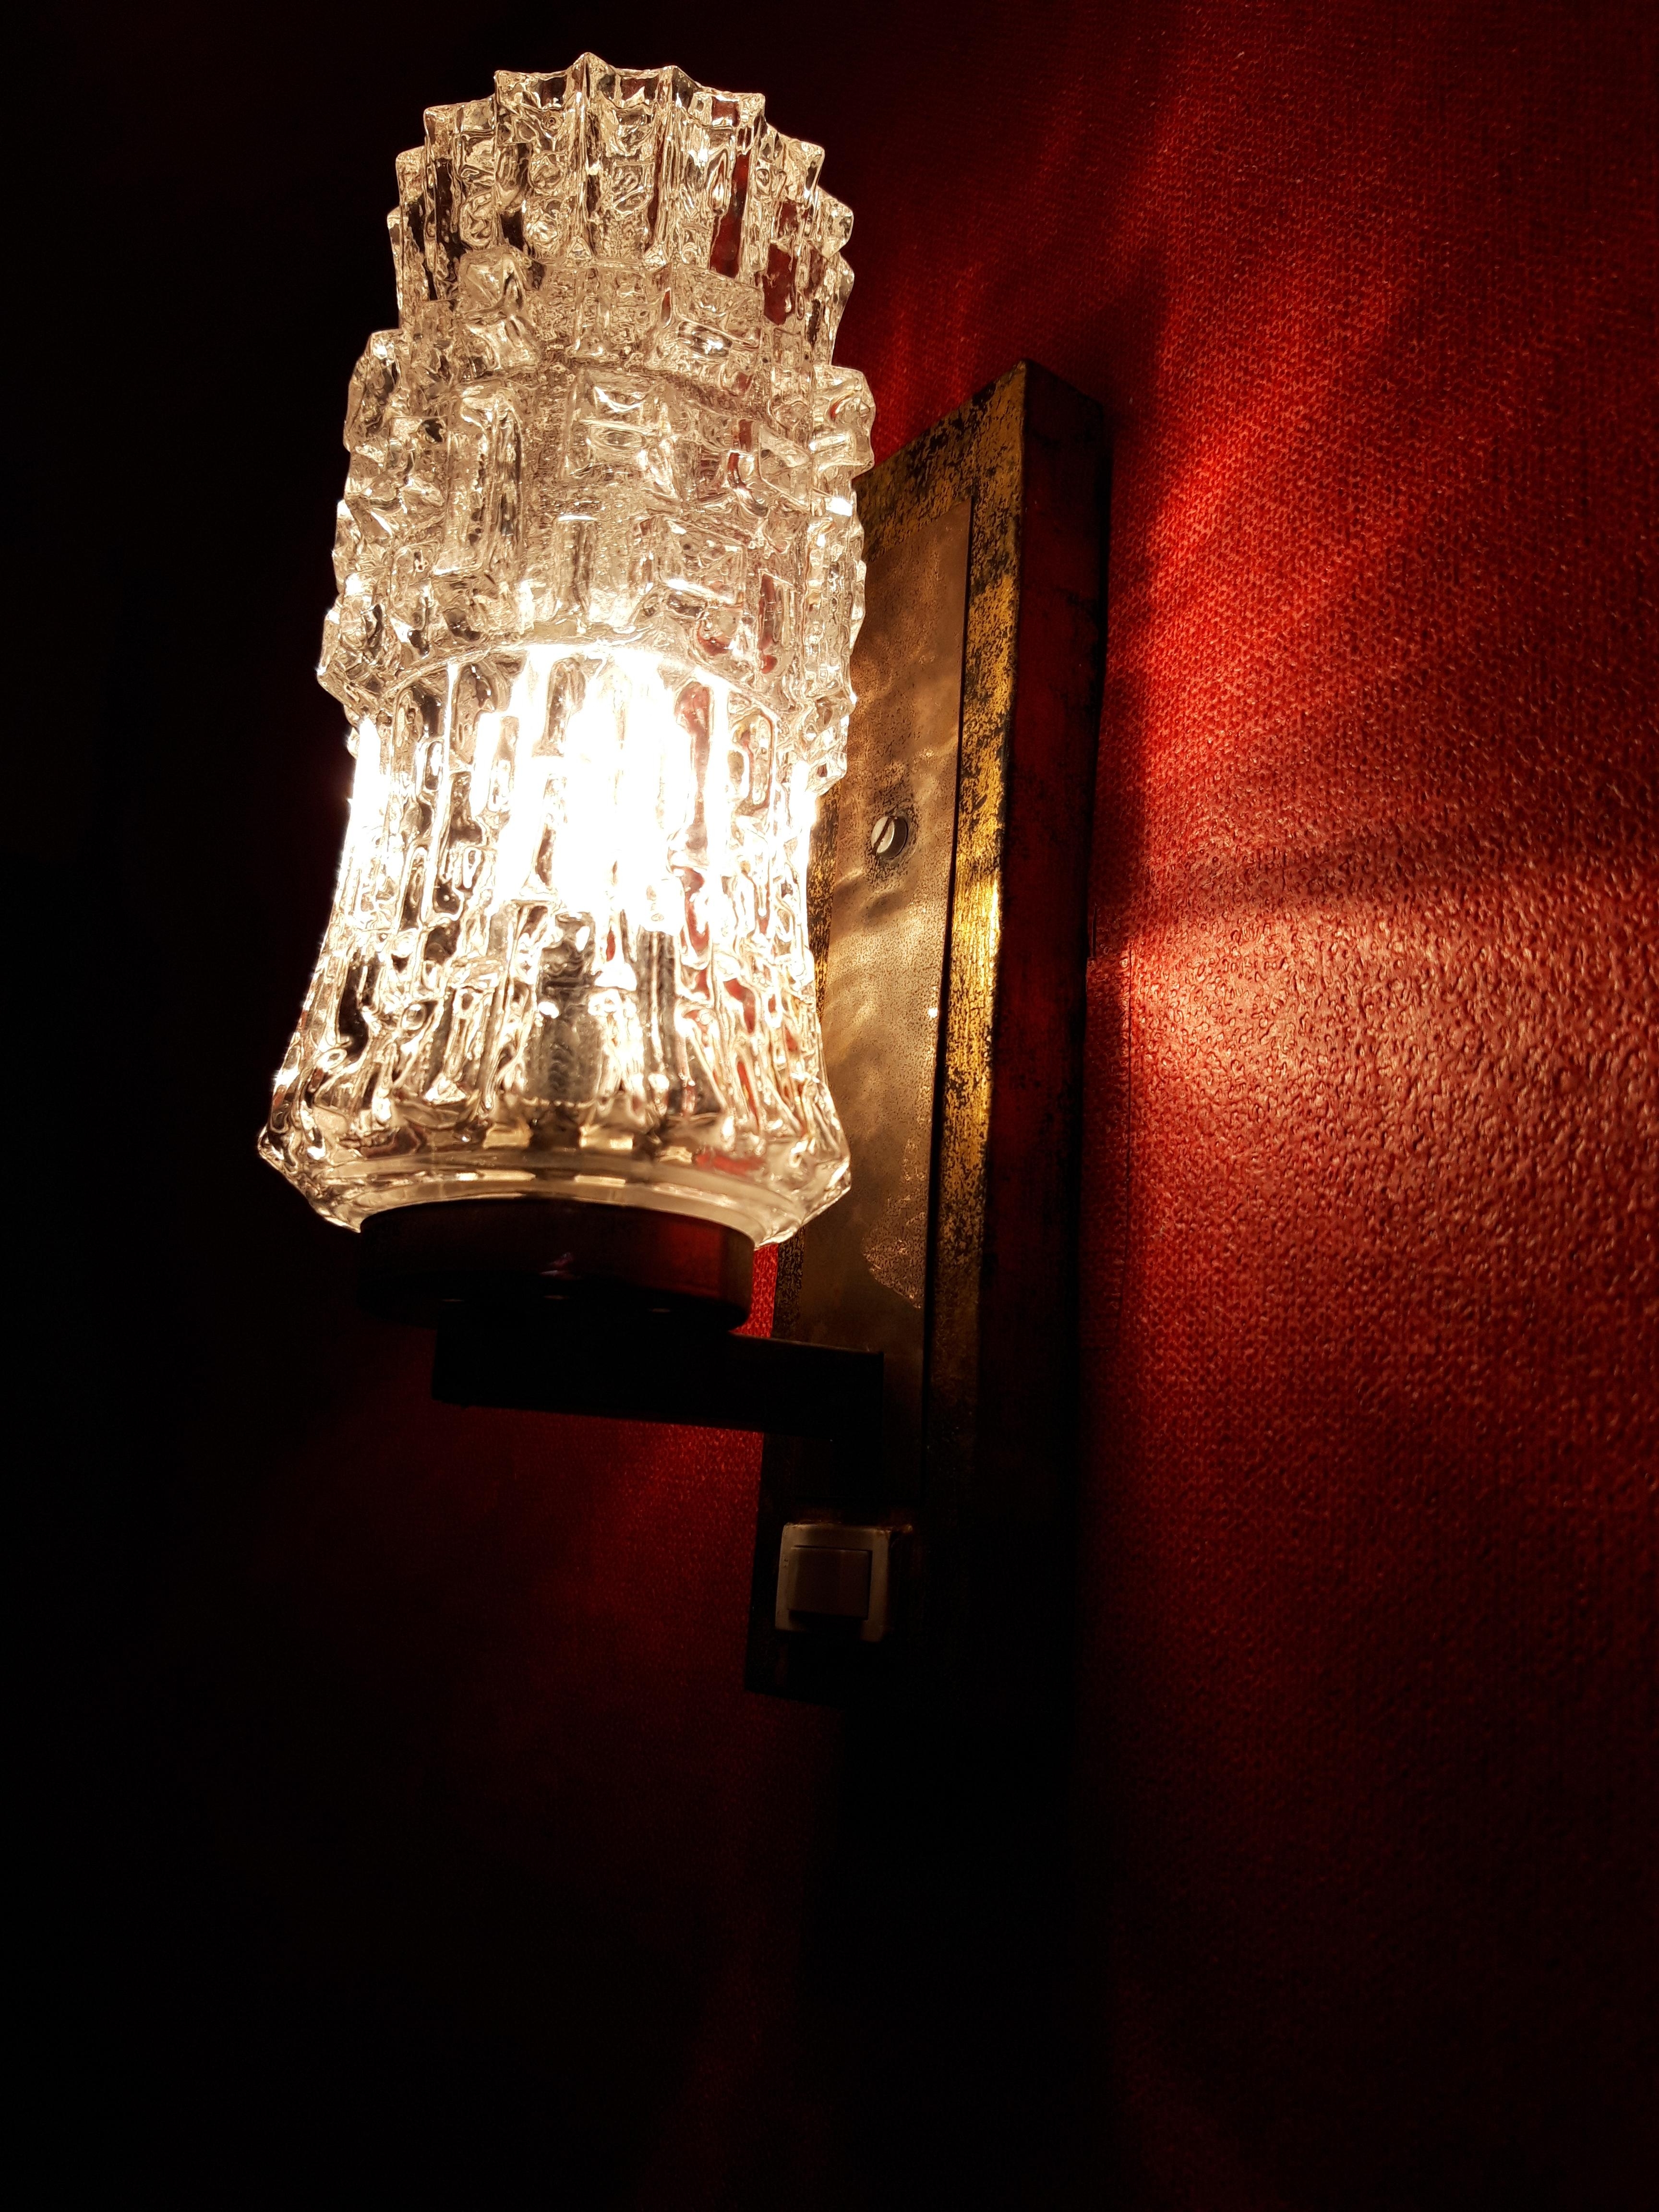 #Flurlampe #wandlampe #gepimpt #altbau #rot #gold #upcycling